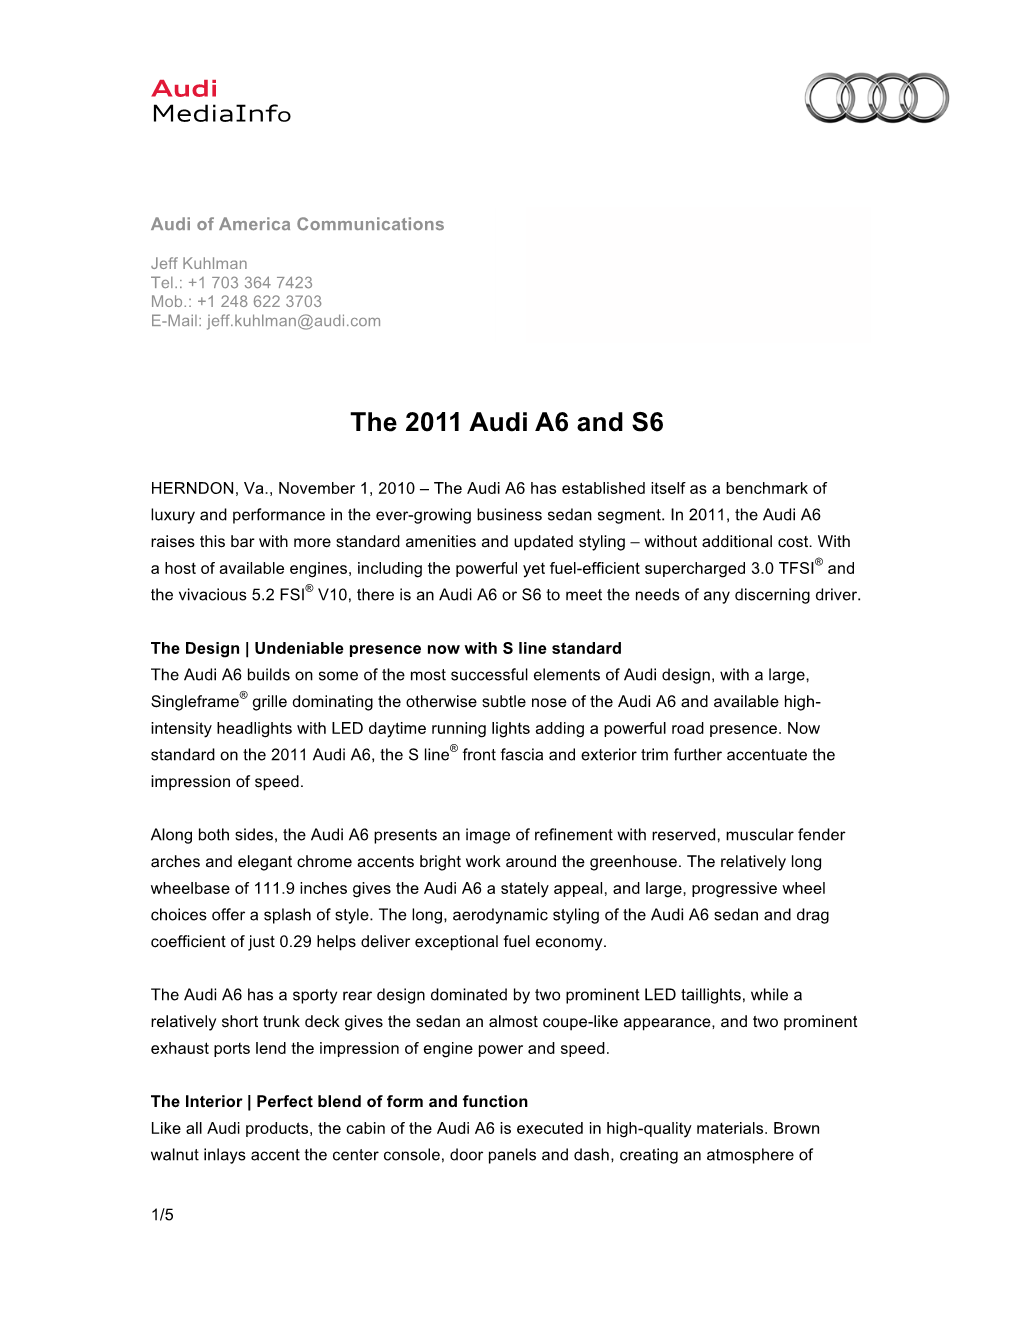 2011 Audi A6/S6 Media Information